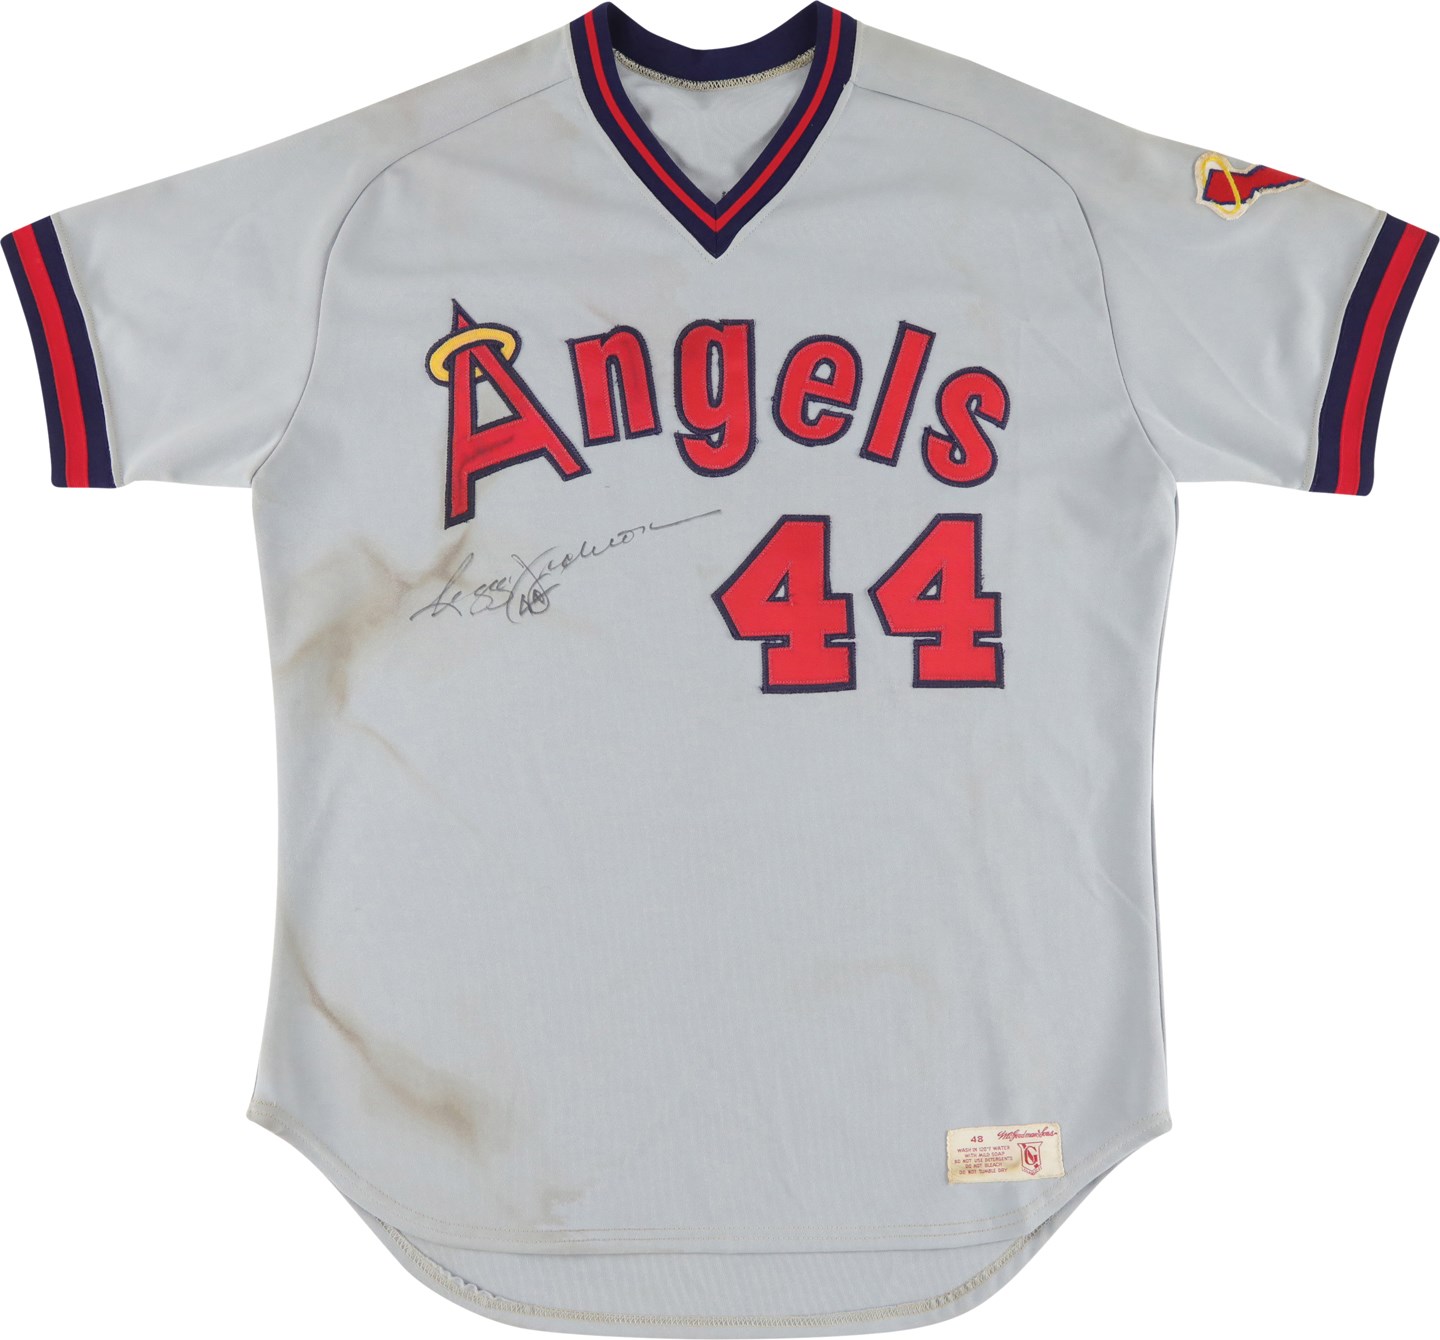 Baseball Equipment - Mid-1980s Reggie Jackson California Angels Signed Game Worn Jersey